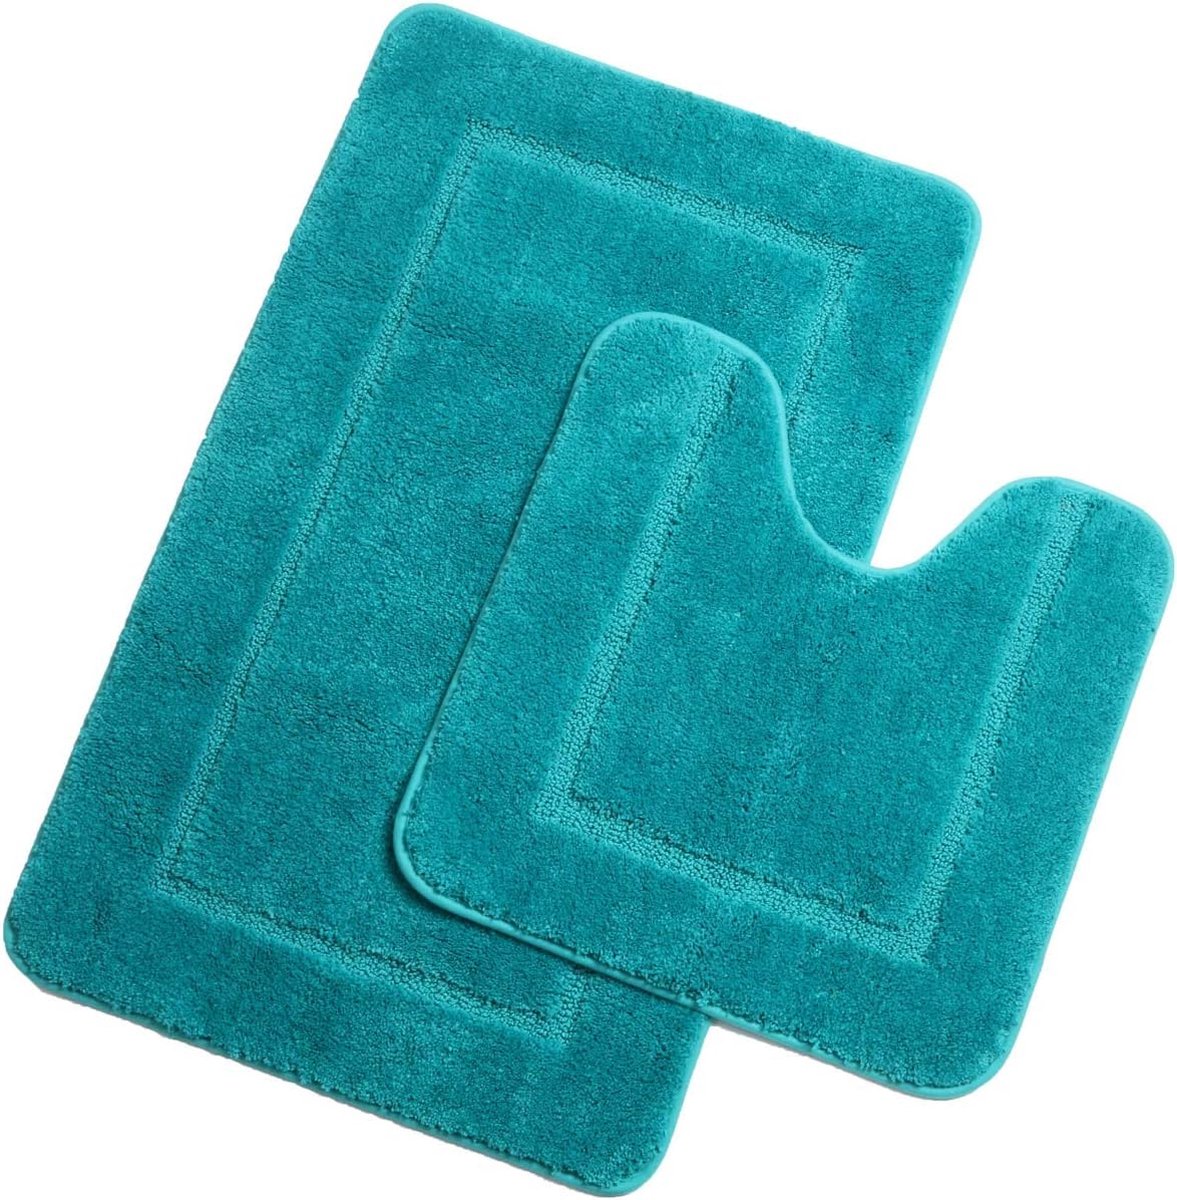 Microfiber badmatten set 2 stuks antislip wasbare badmat badmat en toiletmat absorberend badkamertapijt set (turquoise, 53 x 86 cm + 50 x 50 cm)